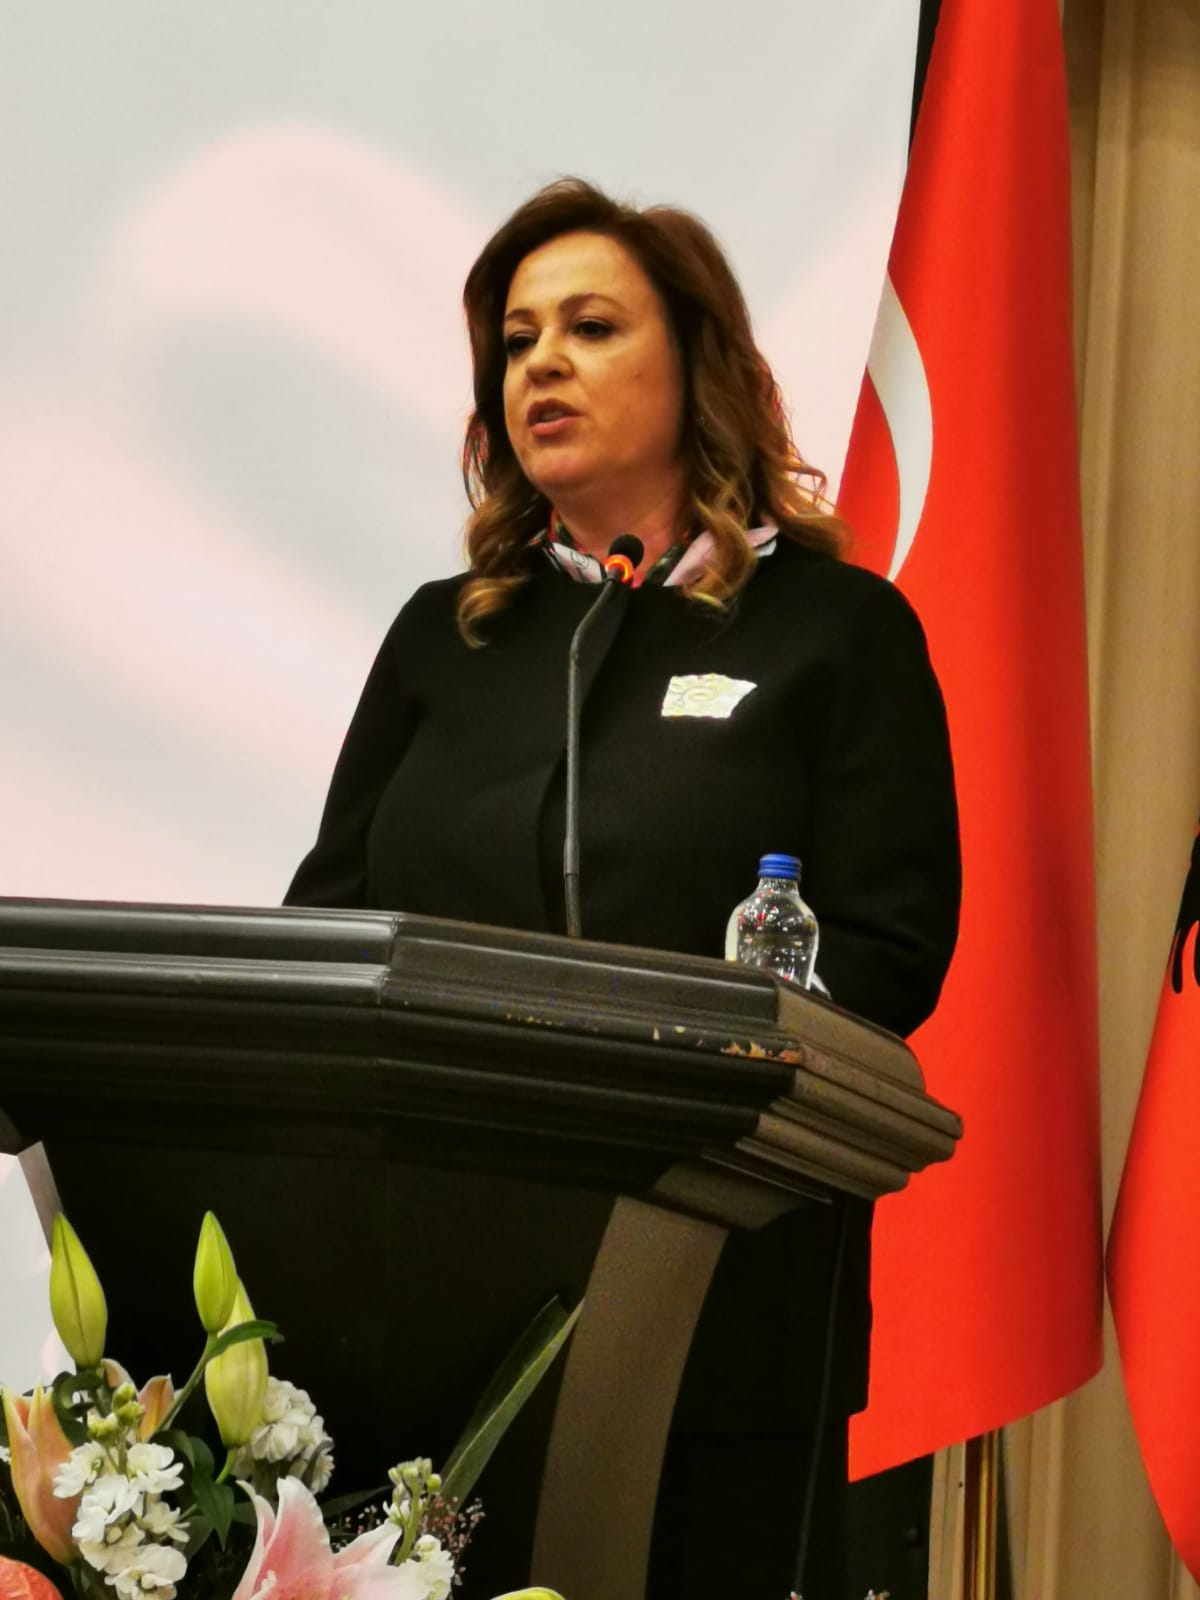 Reception of Blerta Kadzadej, Consul General of Albania